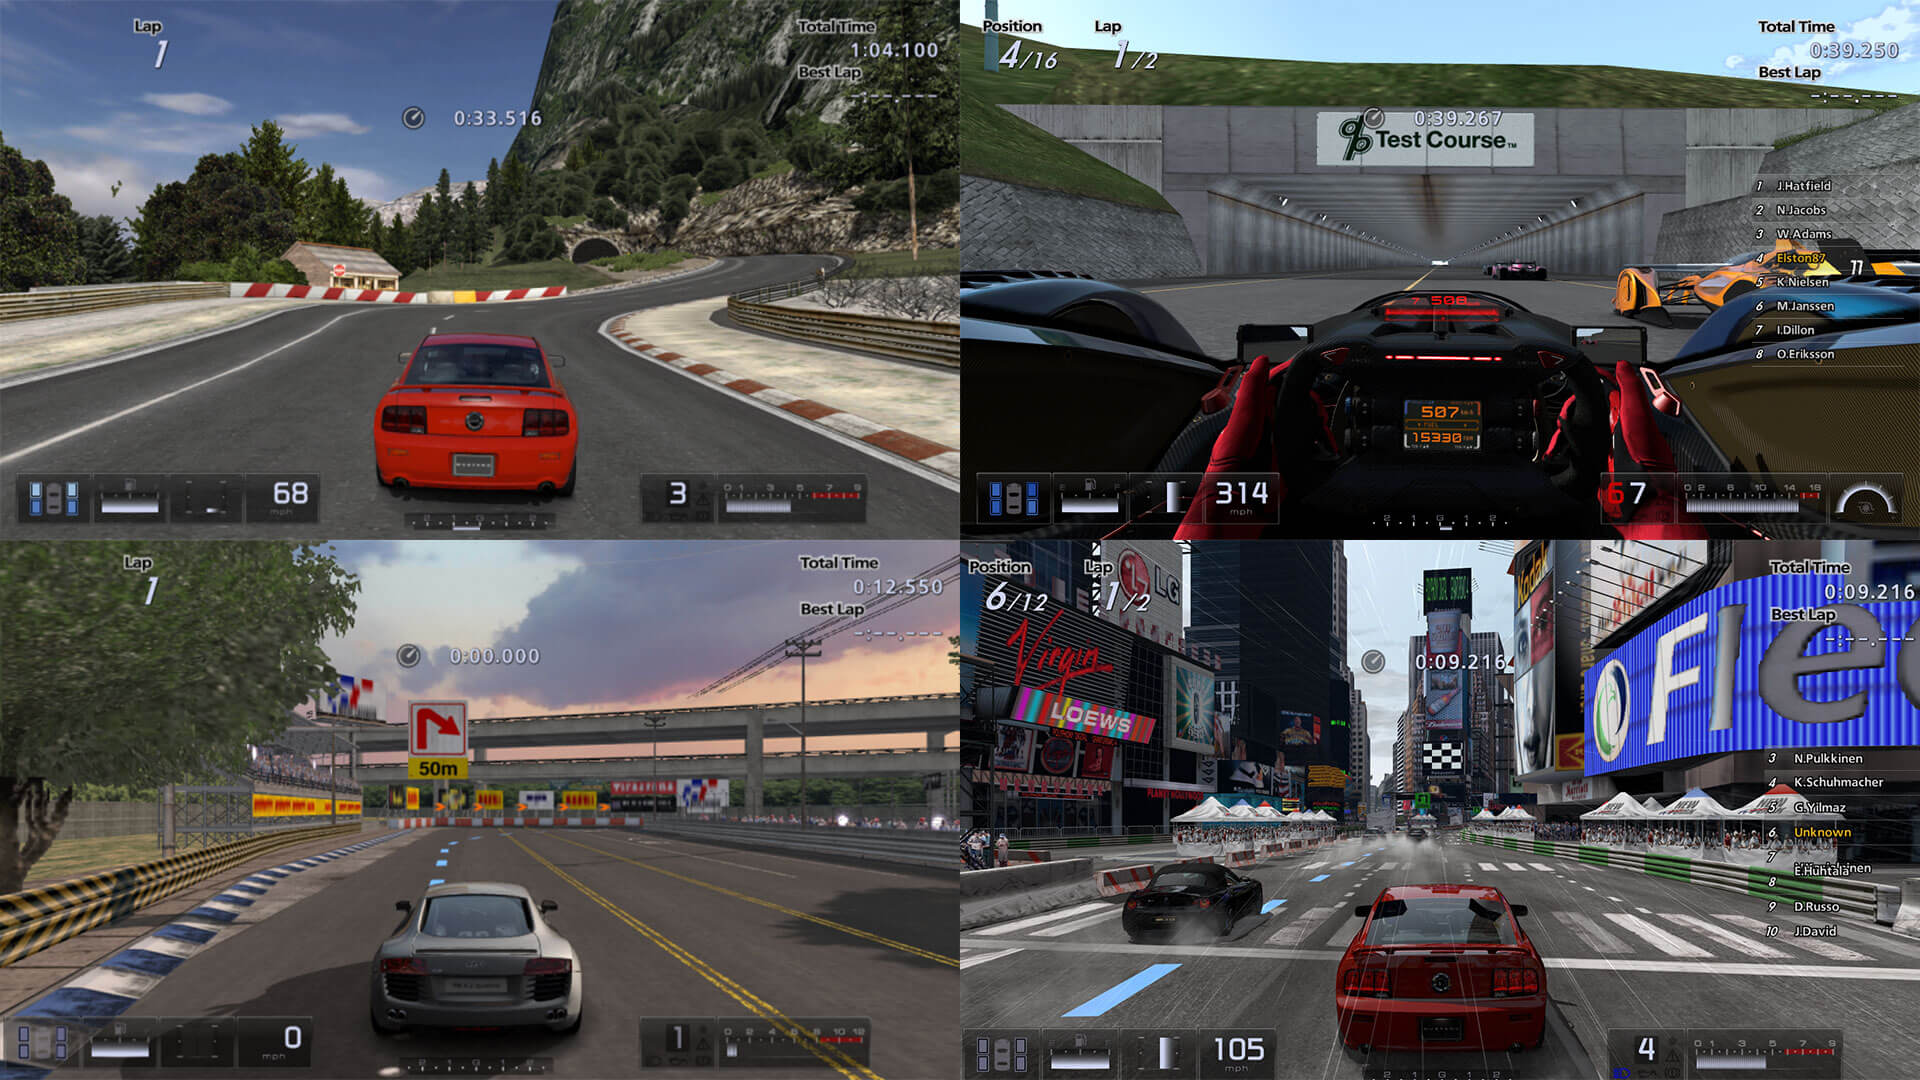 Gran Turismo 5 (Review)